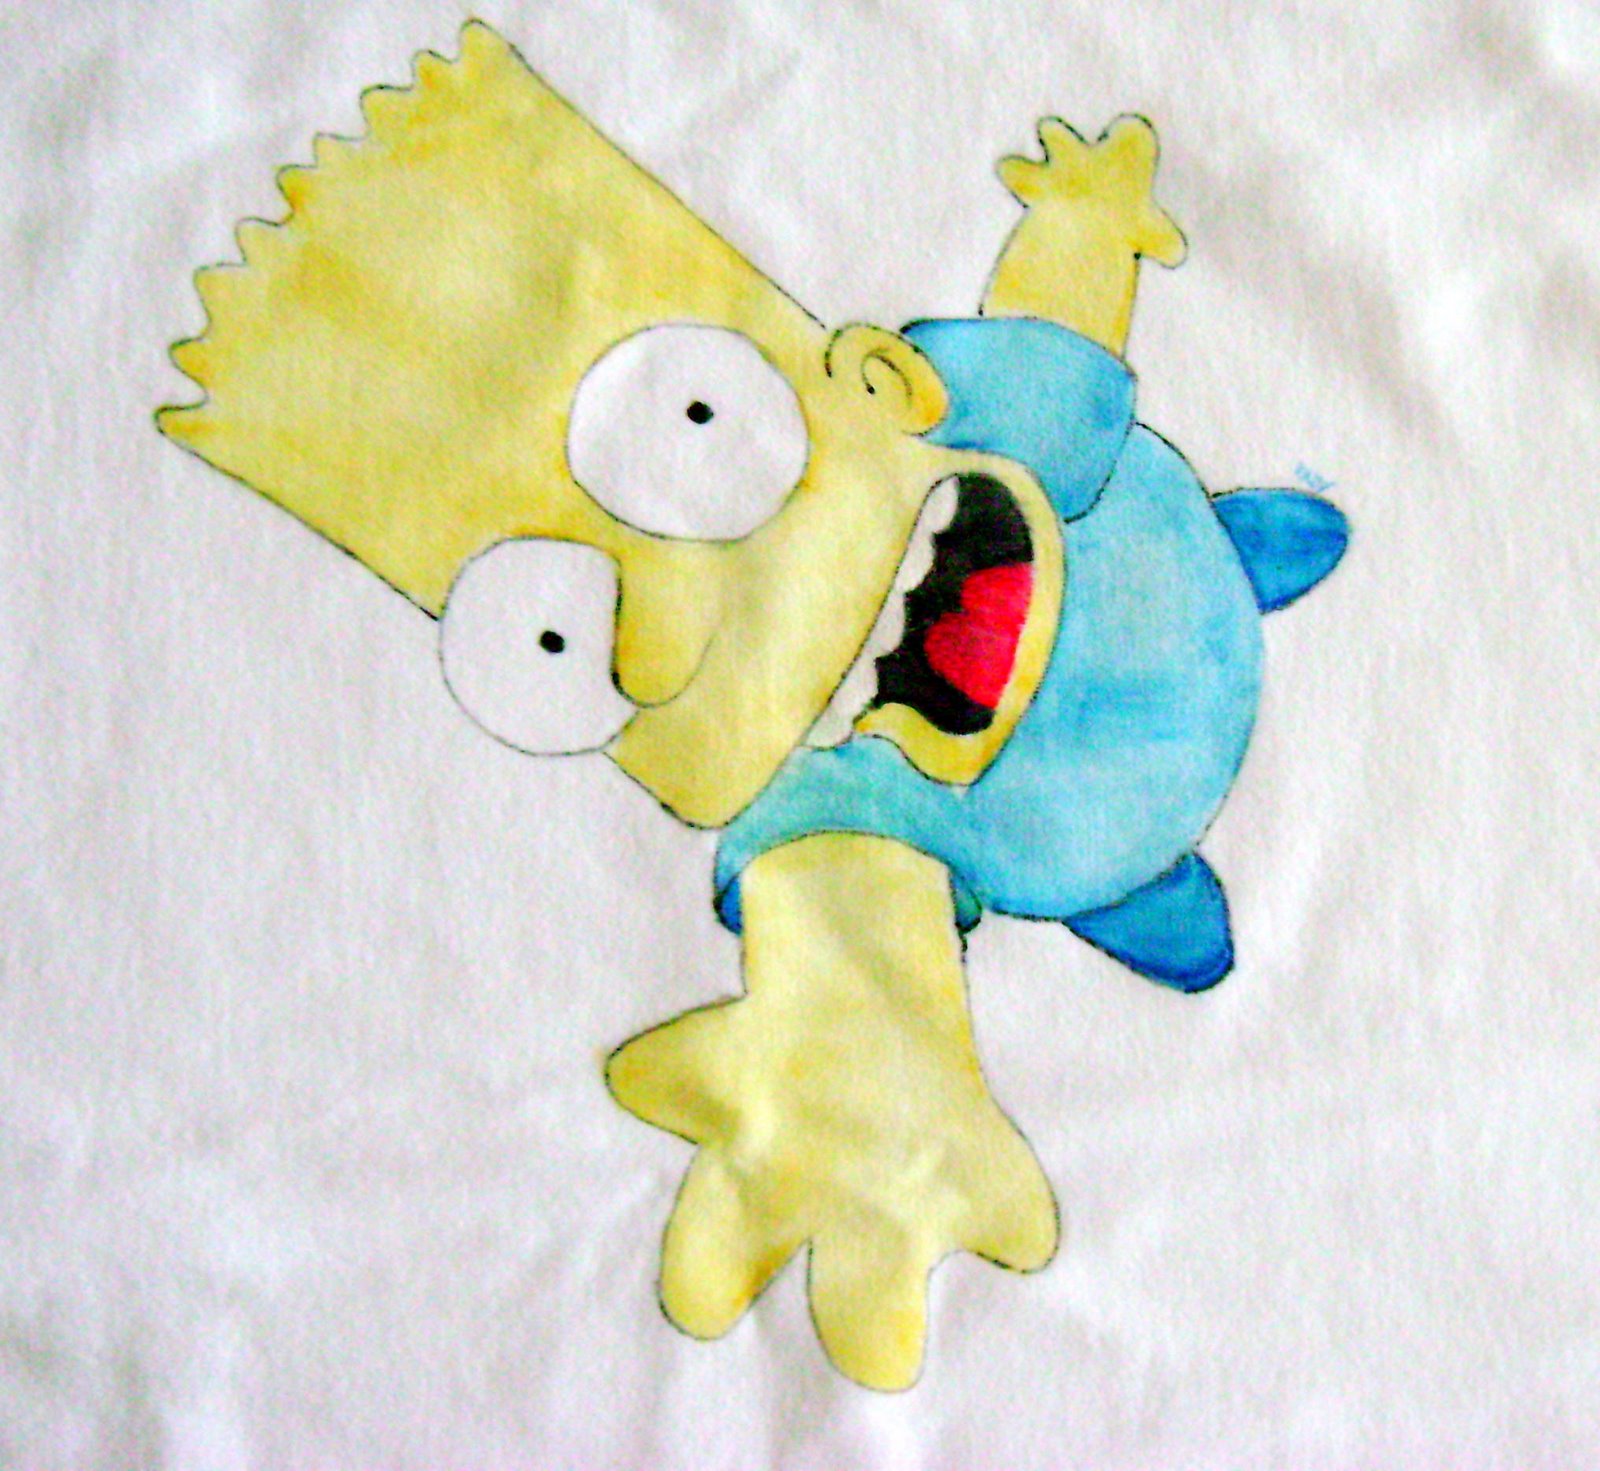 T-shirt Bart Simpson